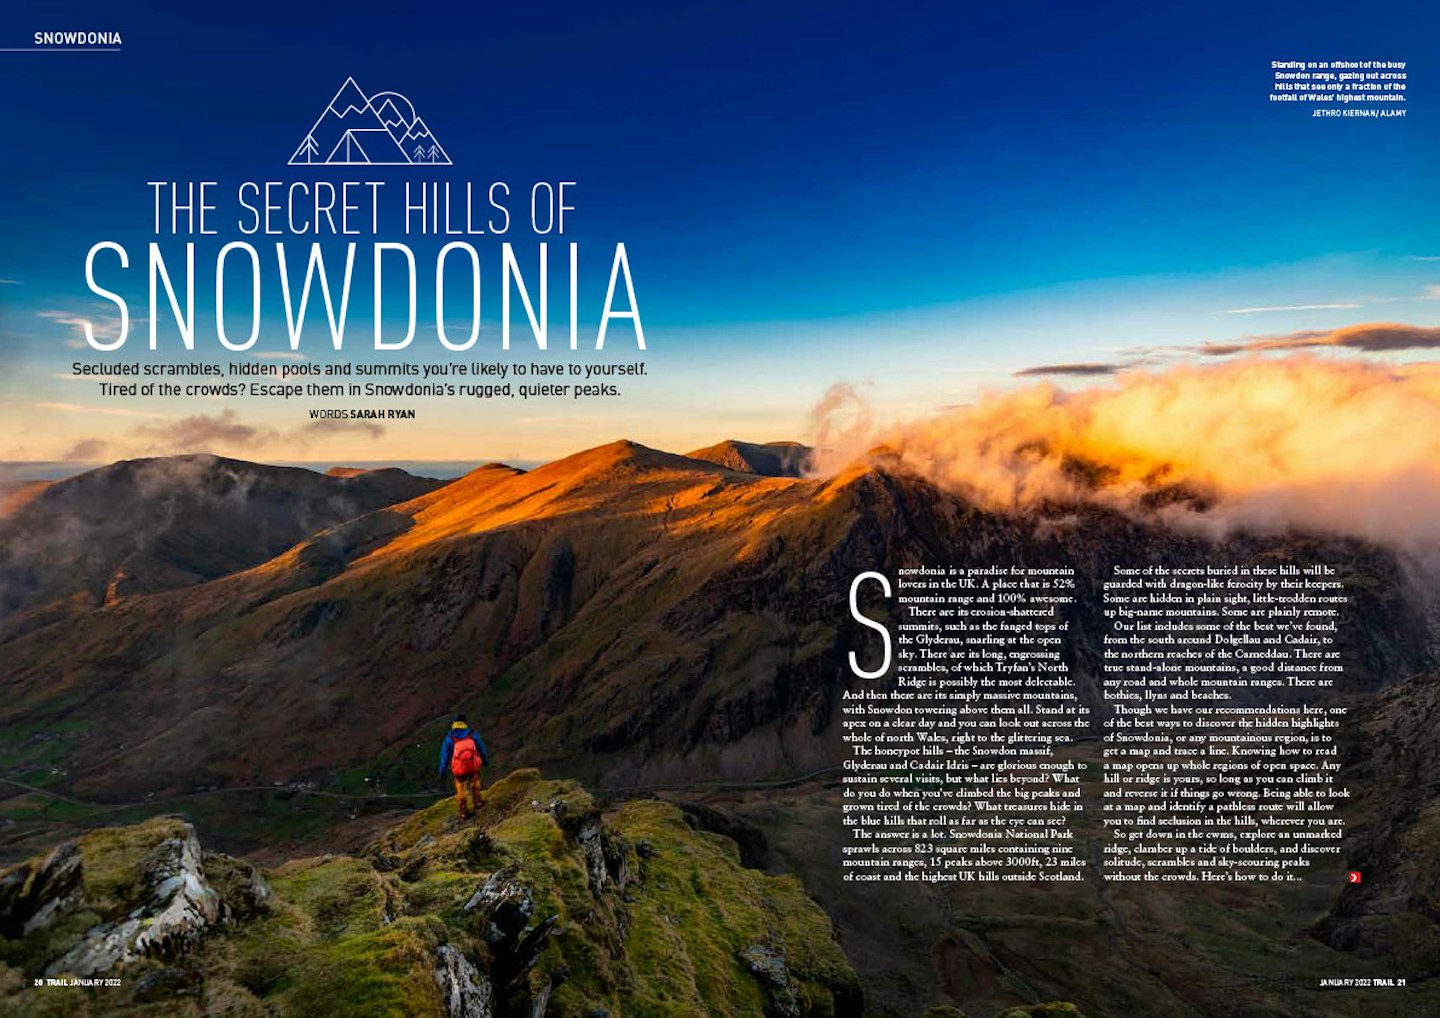 The secret hills of Snowdonia